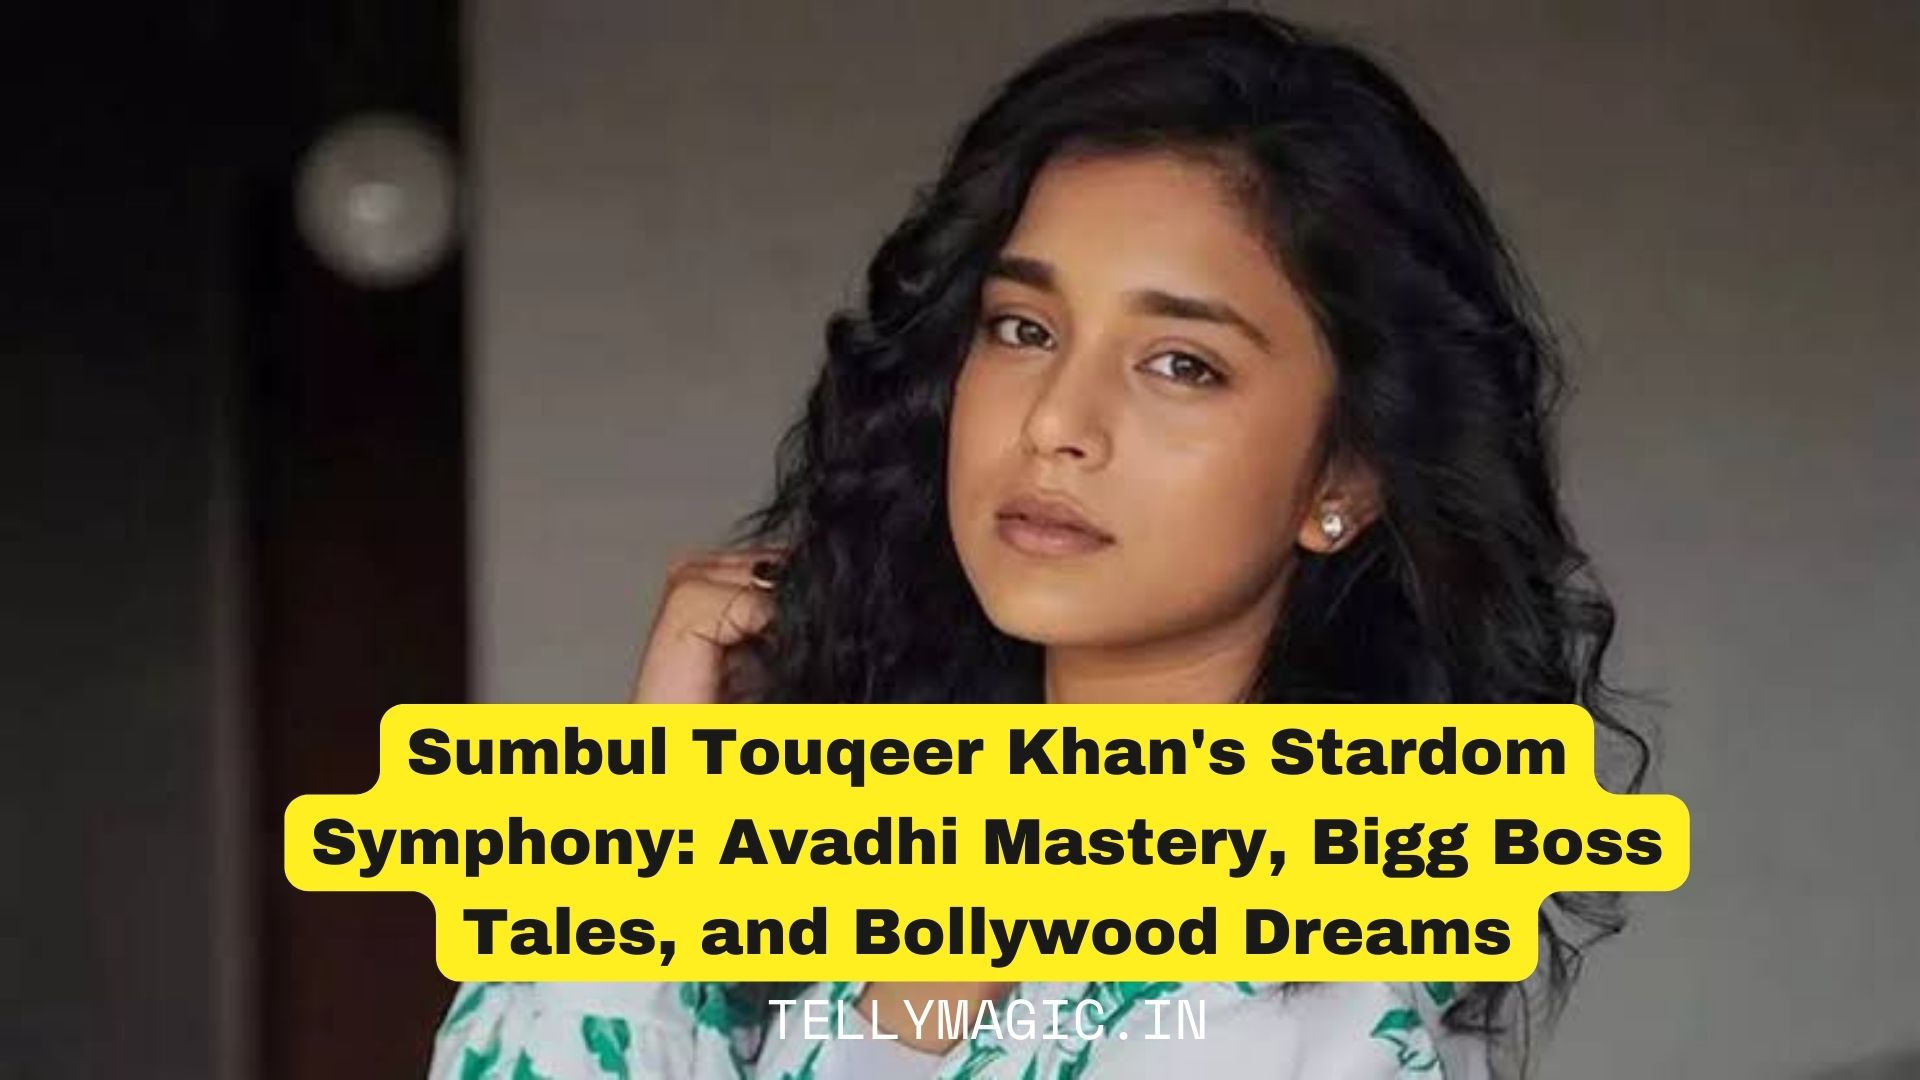 Sumbul Touqeer Khan Stardom Symphony: Avadhi Mastery, Bigg Boss Tales, and Bollywood Dreams